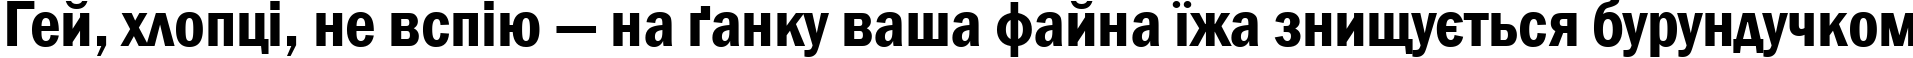 Пример написания шрифтом Franklin Gothic Demi Cond текста на украинском